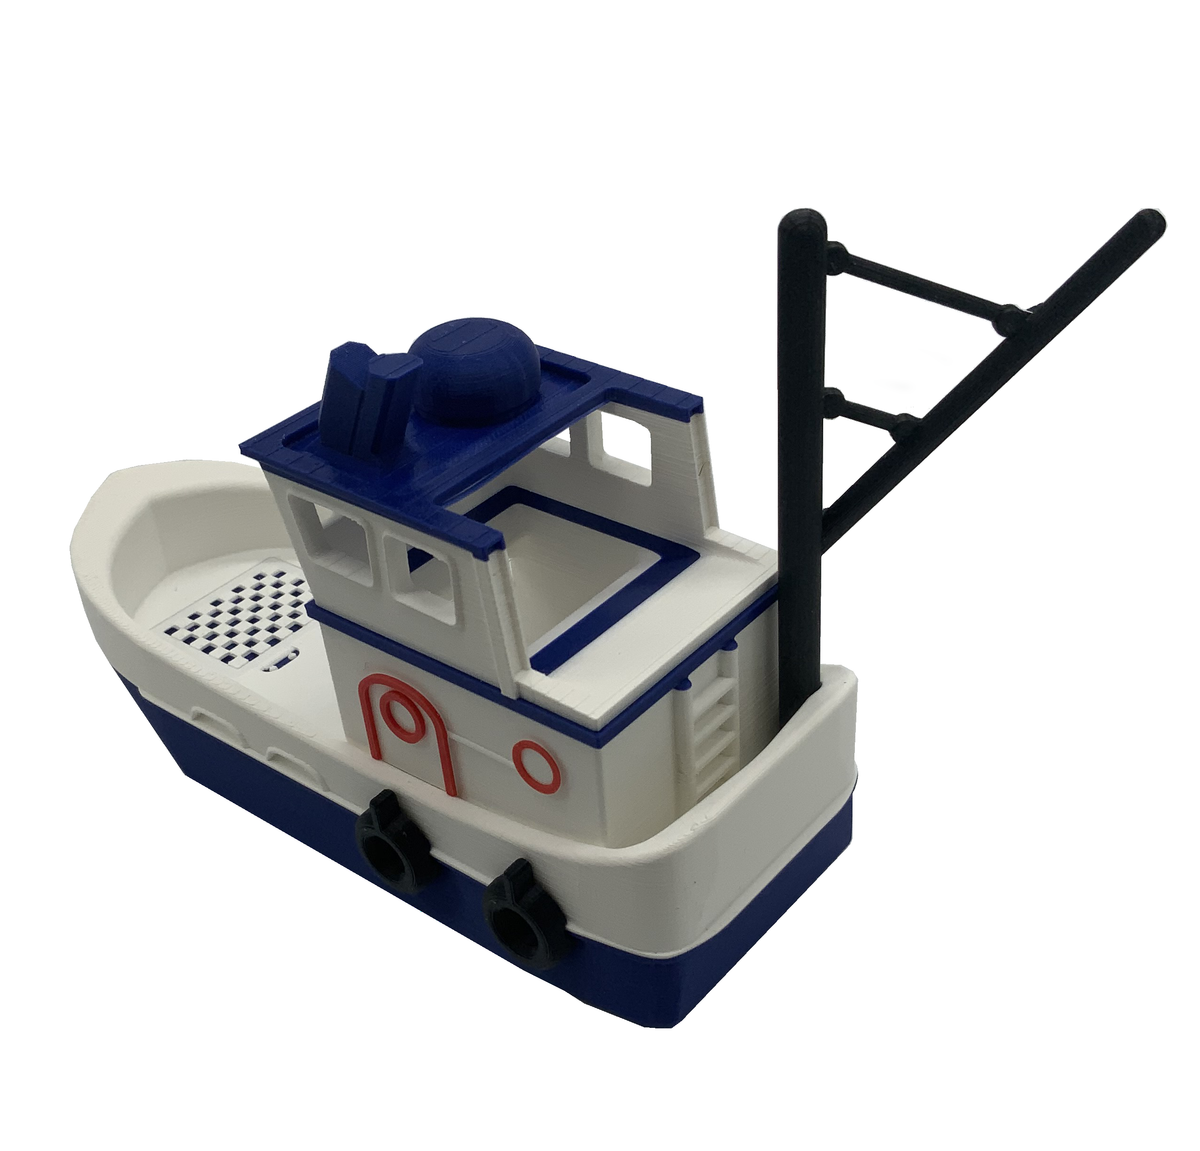 Fleet Fishing Boat Dice Tower – GameUp Games